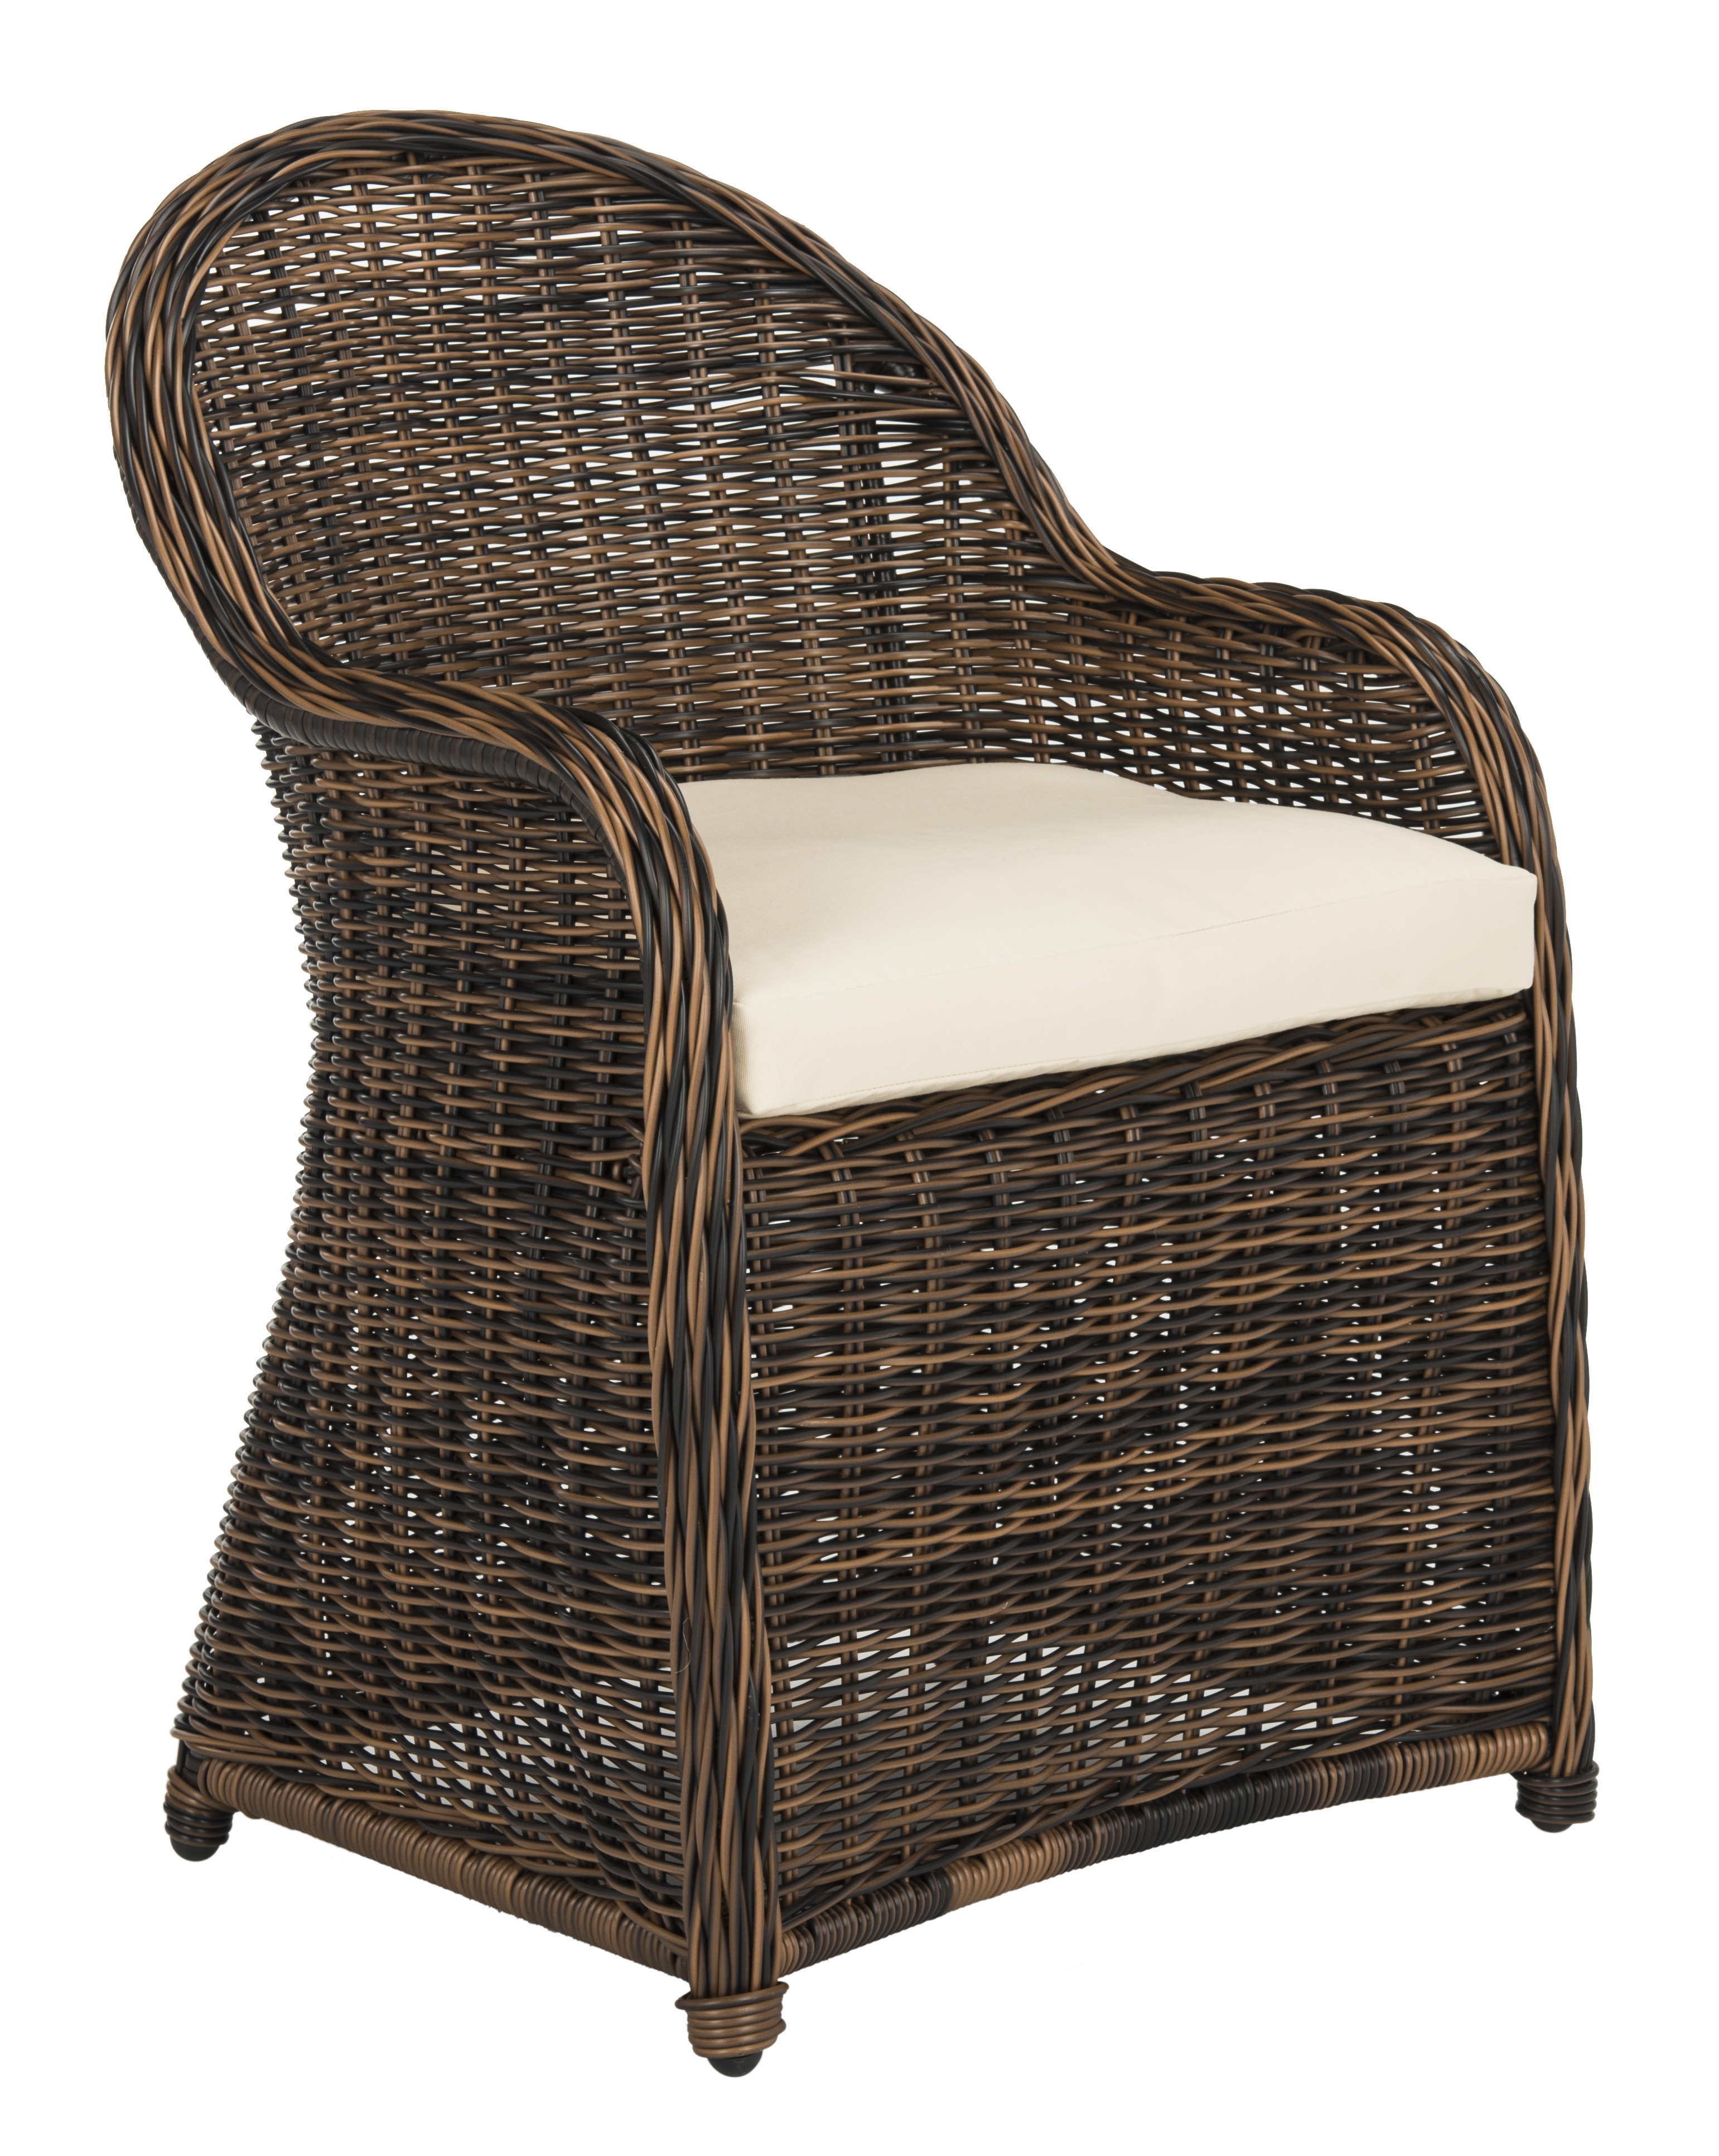 Newton Wicker Arm Chair With Cushion - Brown/Beige - Safavieh - Image 1